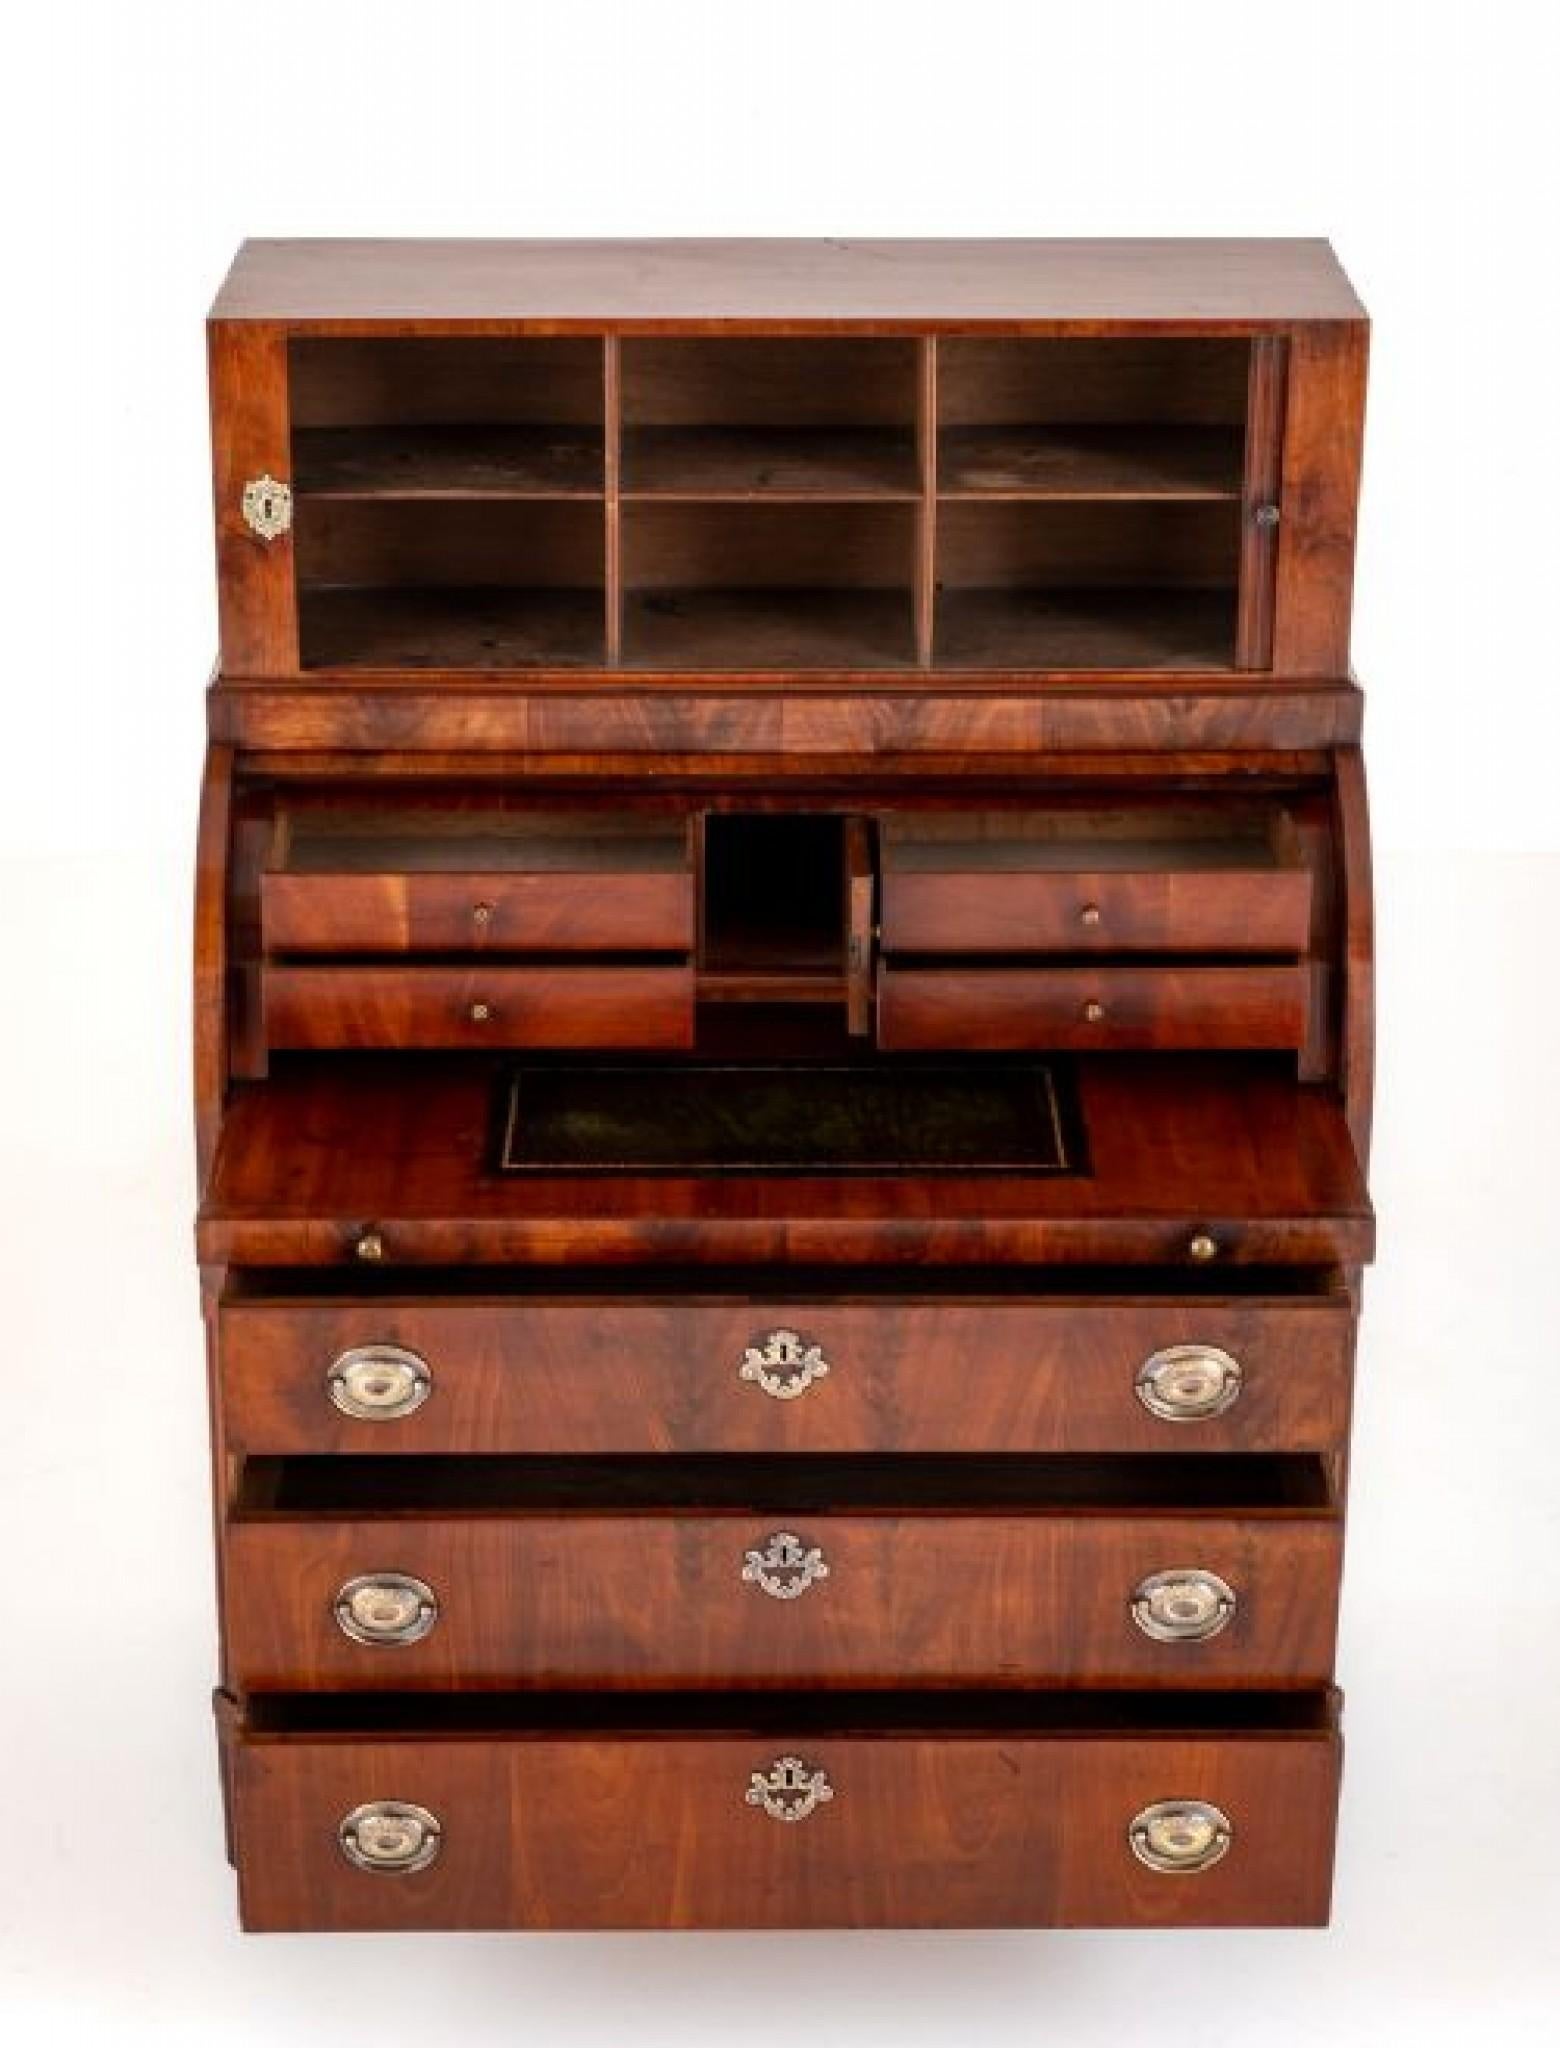 Regency Cylinder Desk Mahogany Furniture, 19th Century For Sale 2